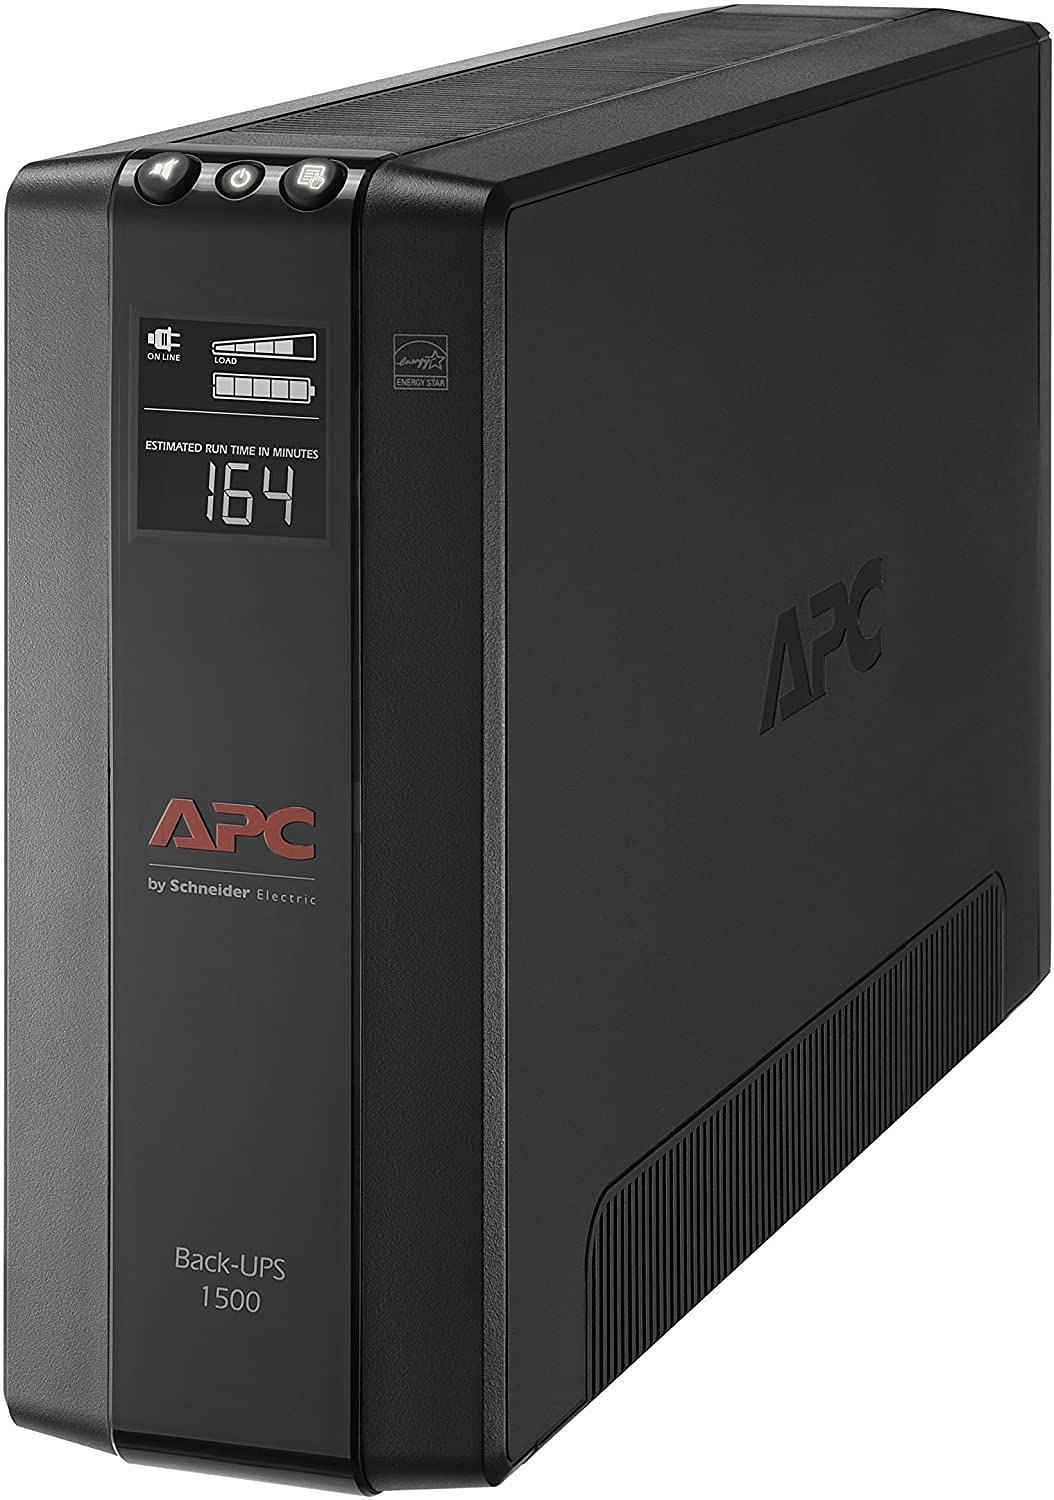 The APC BX1500M (Image via Amazon)